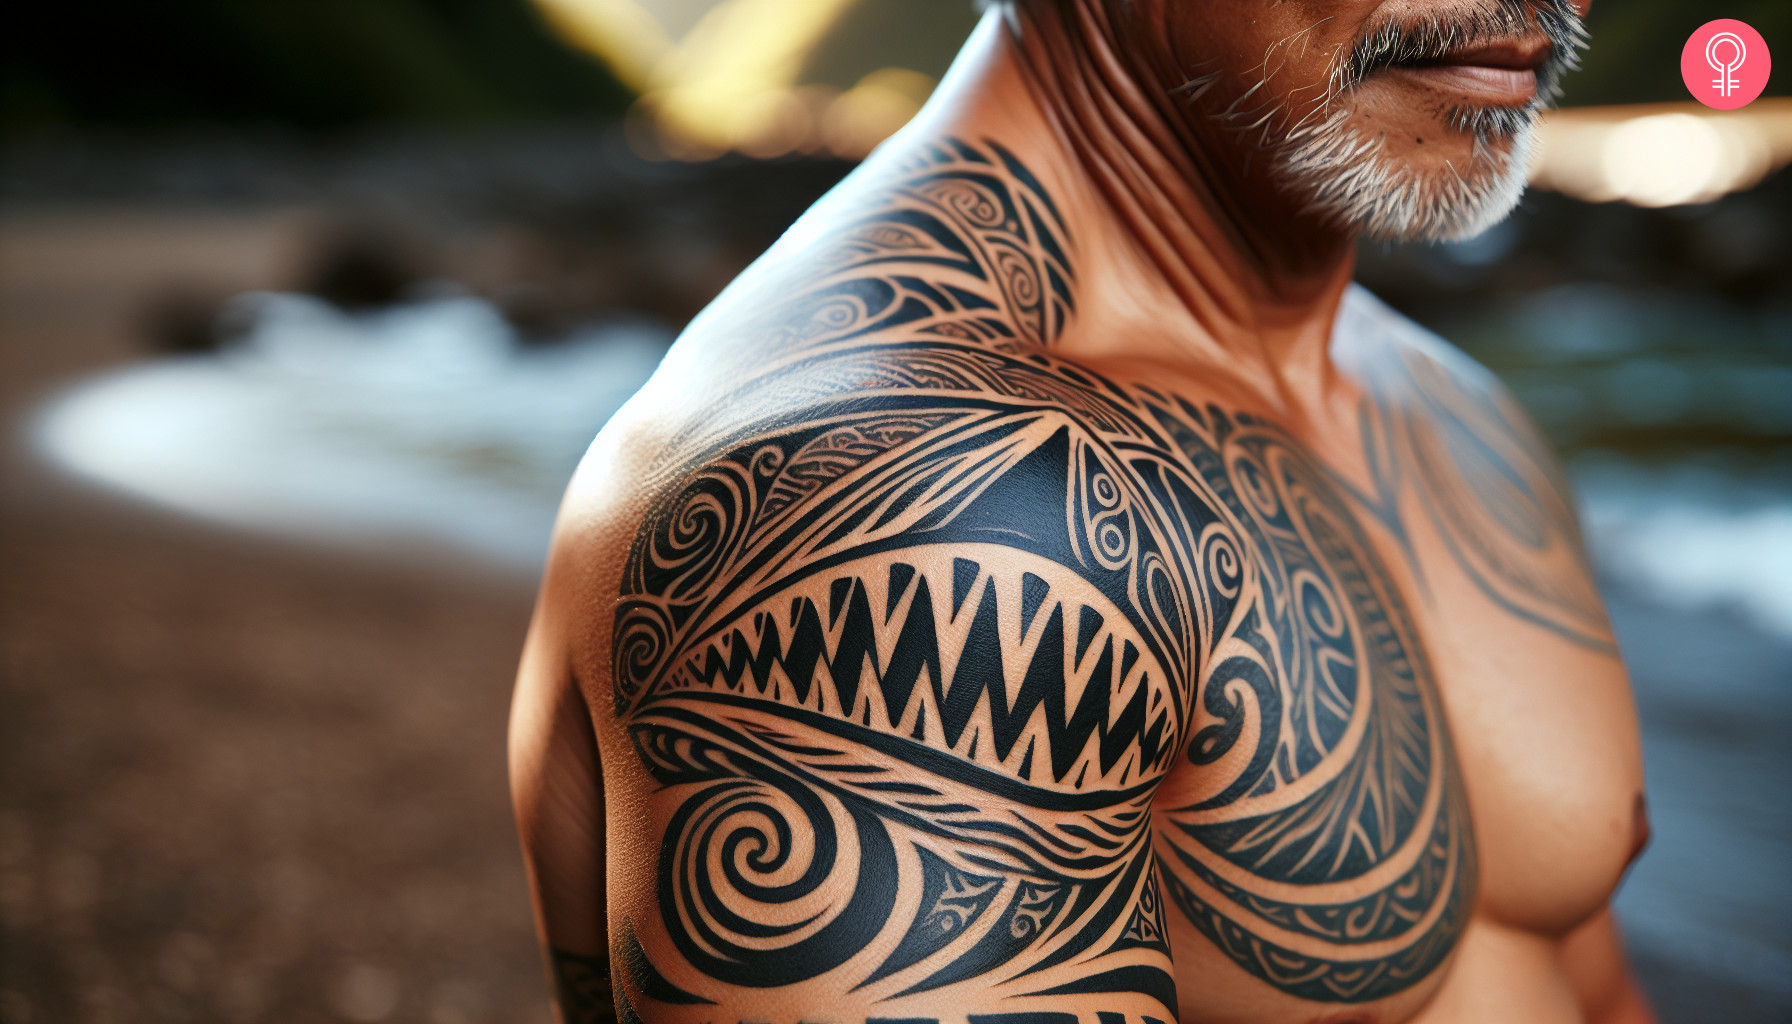 Shark teeth maori tattoo design on the shoulder of a man